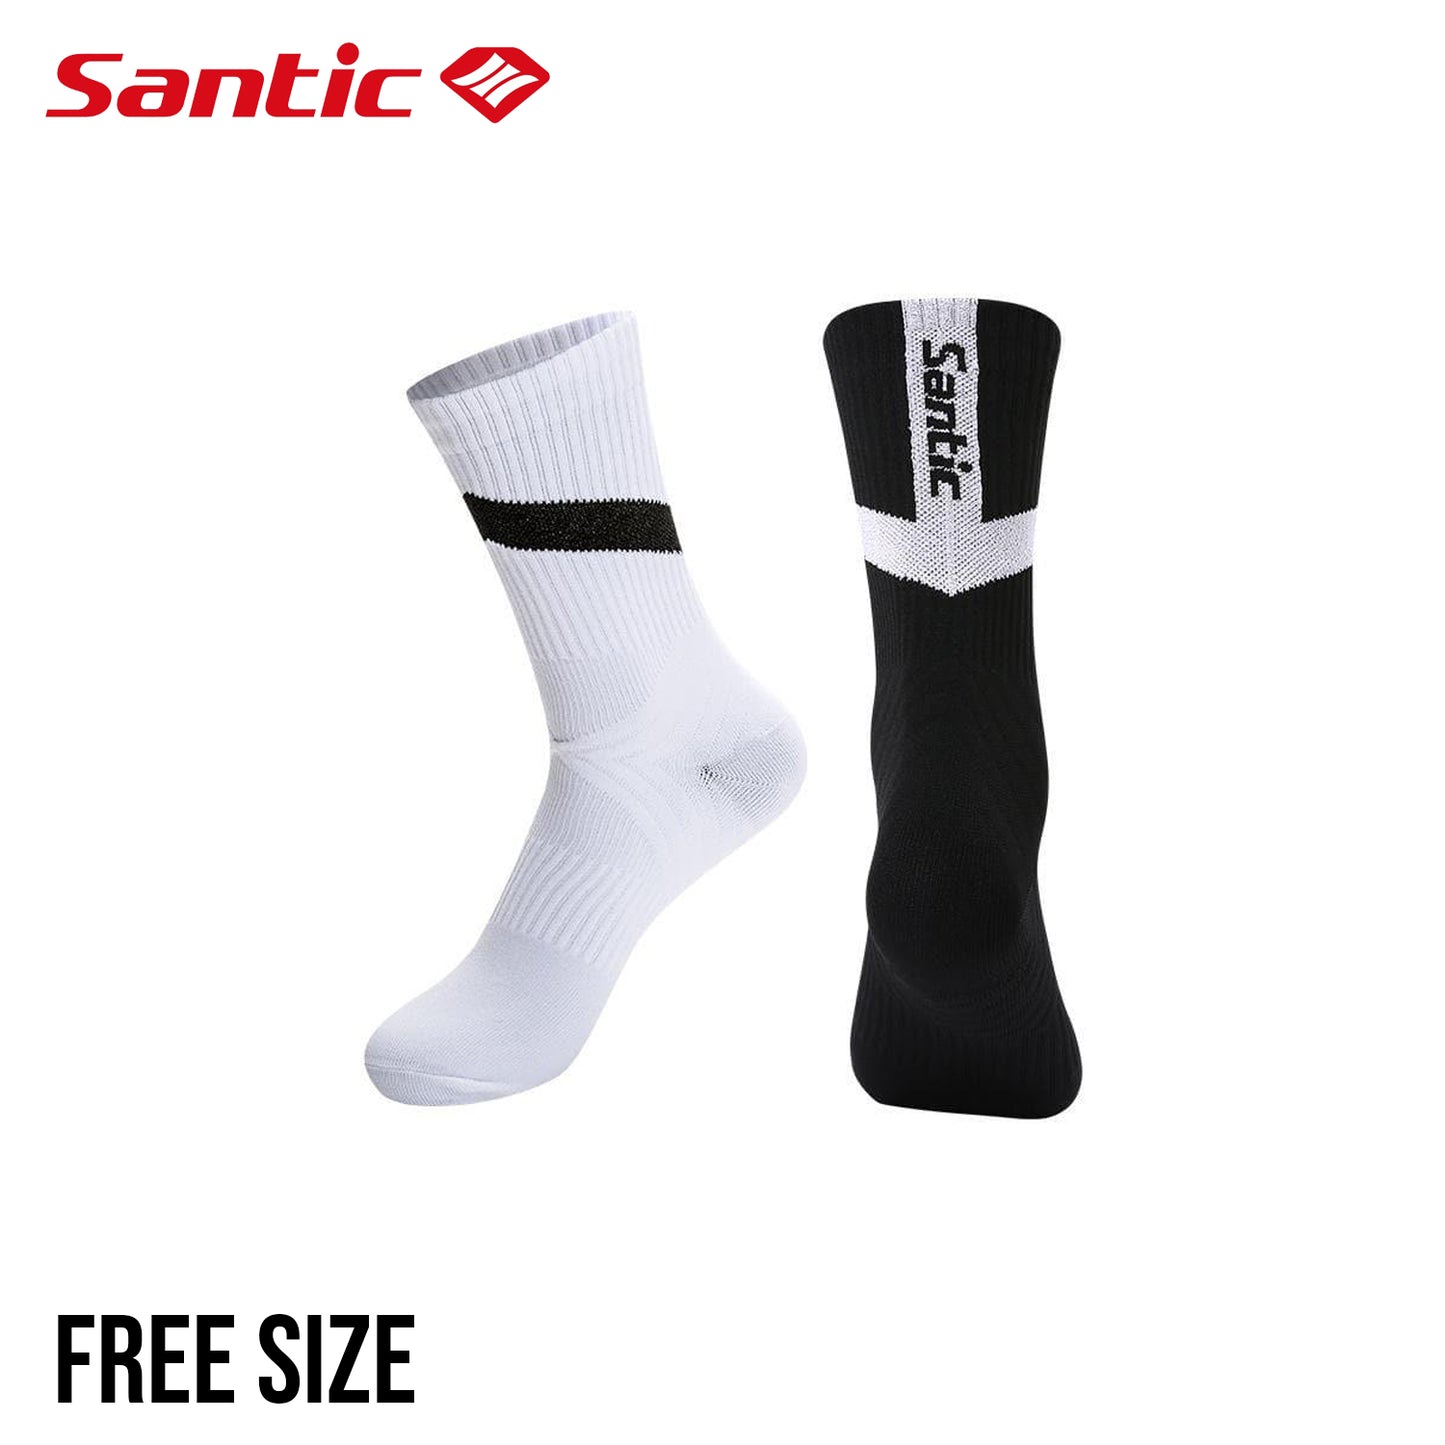 Santic LiangYi Reflective Cycling Socks - Black/White